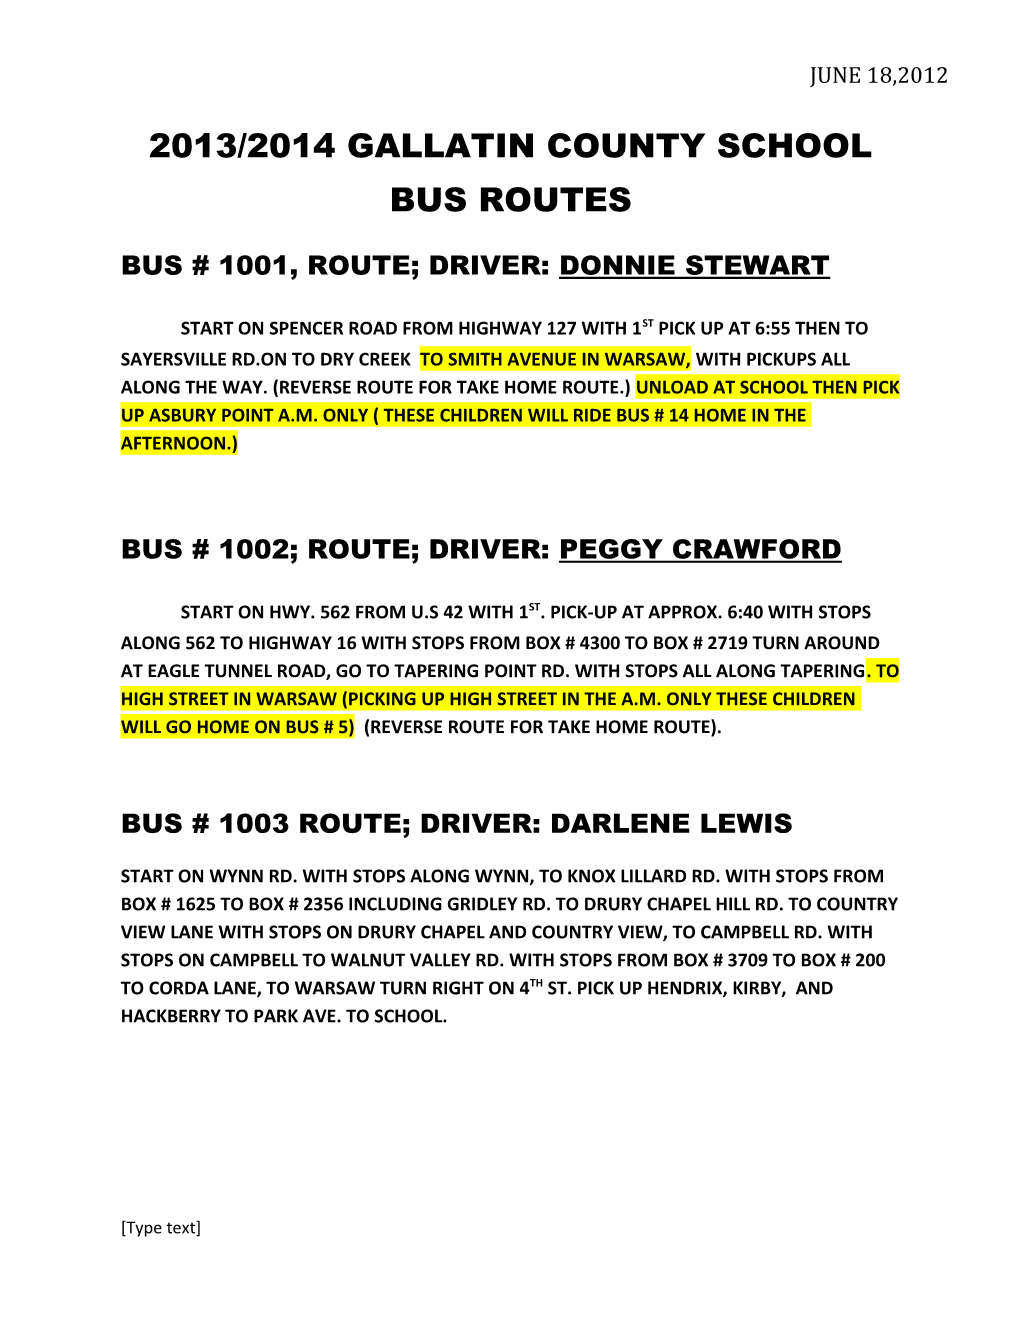 2013/2014 Gallatin County School Bus Routes